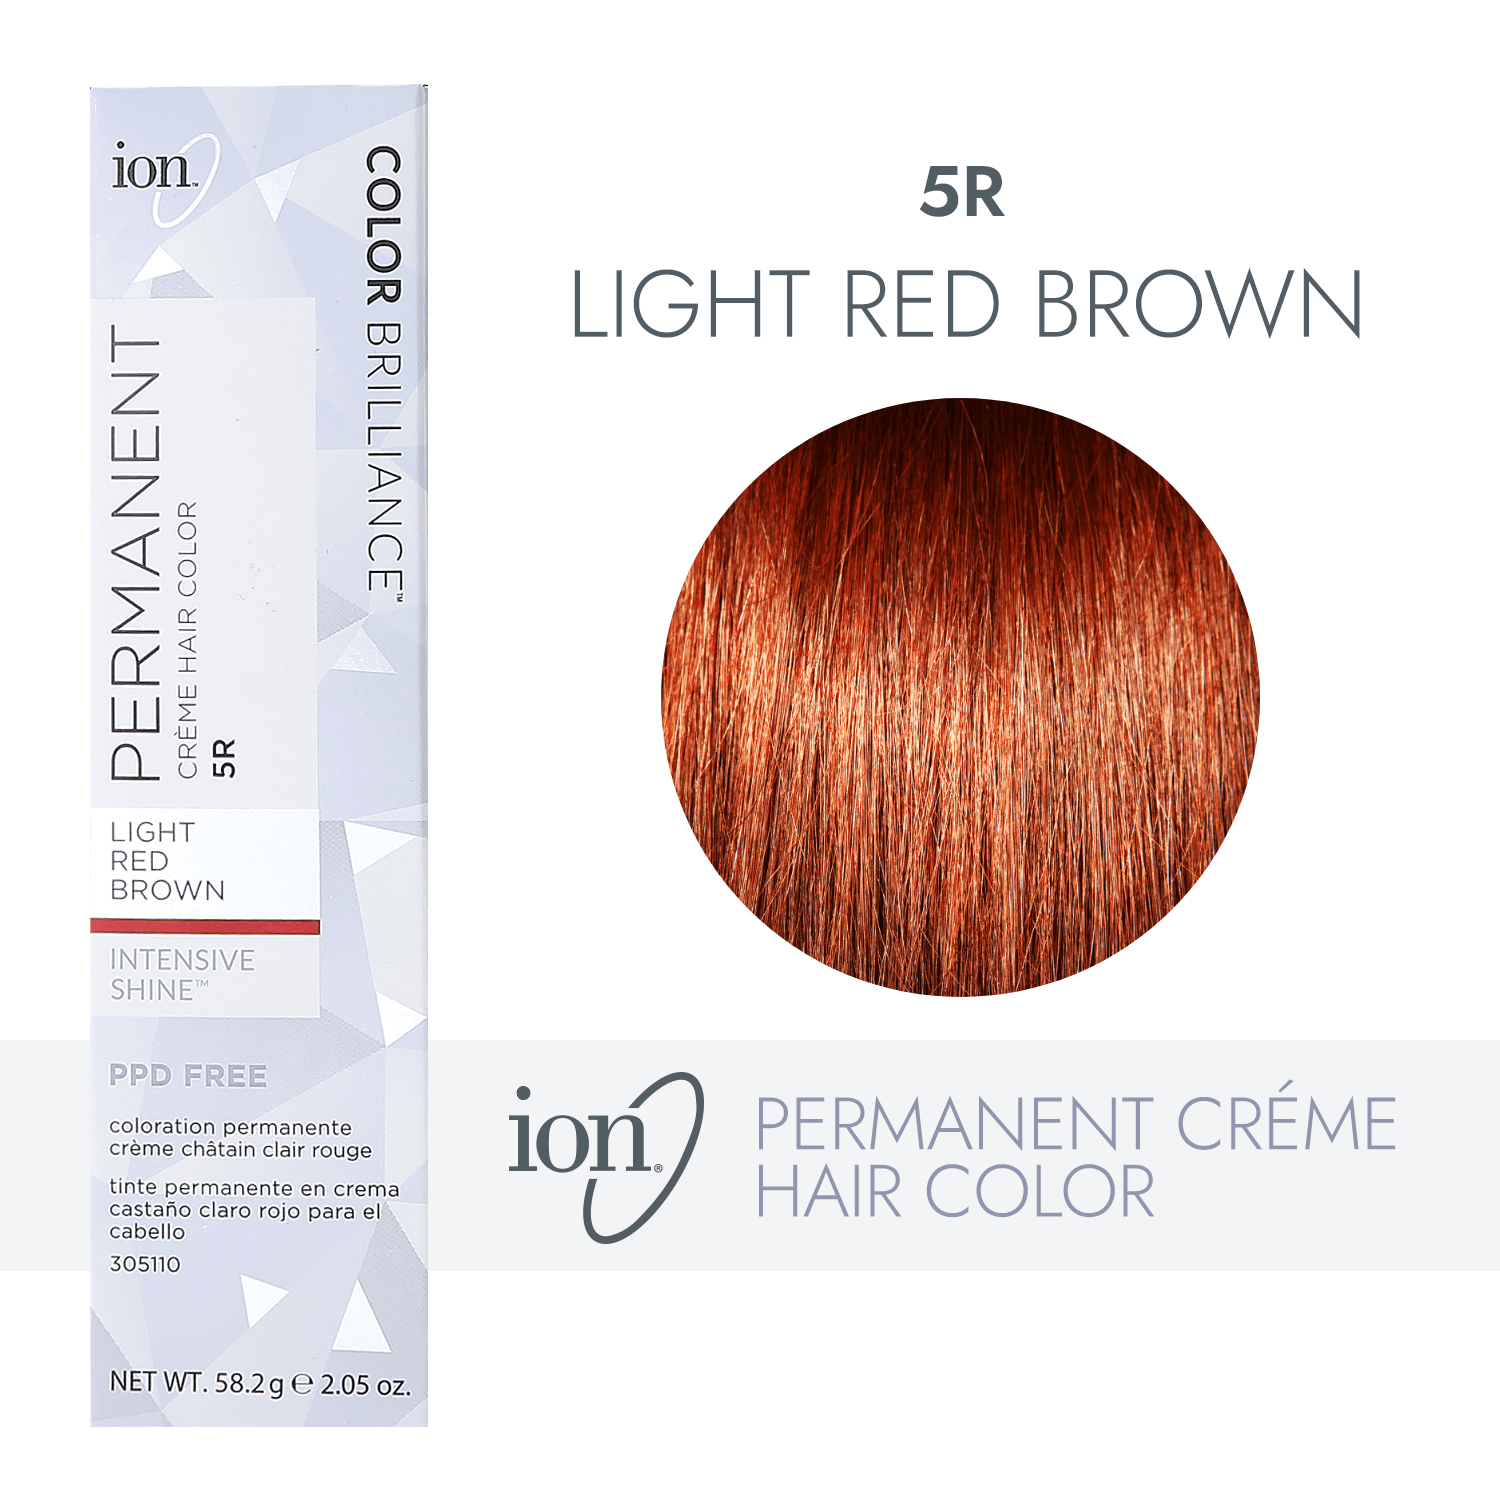 ion permanent creme hair color chart